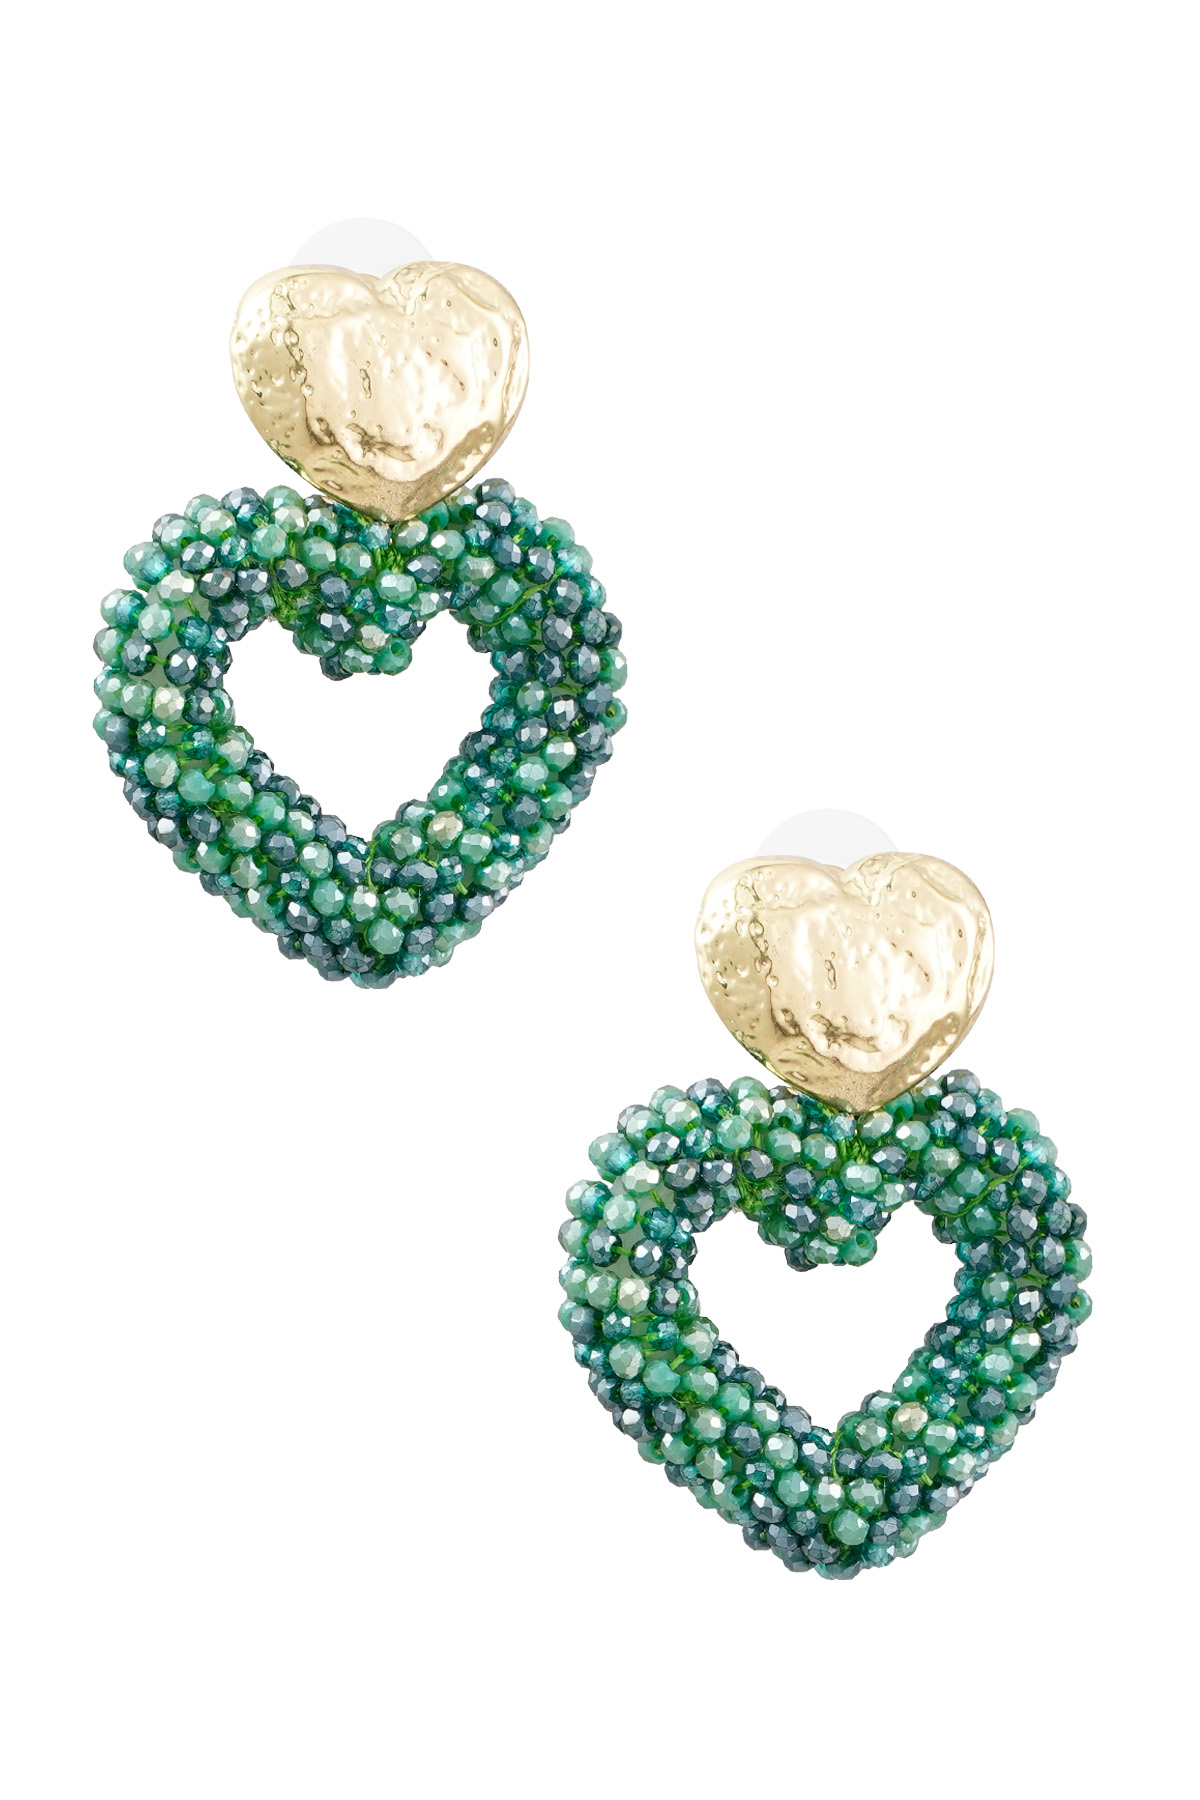 Heart bead earrings - gold/green h5 